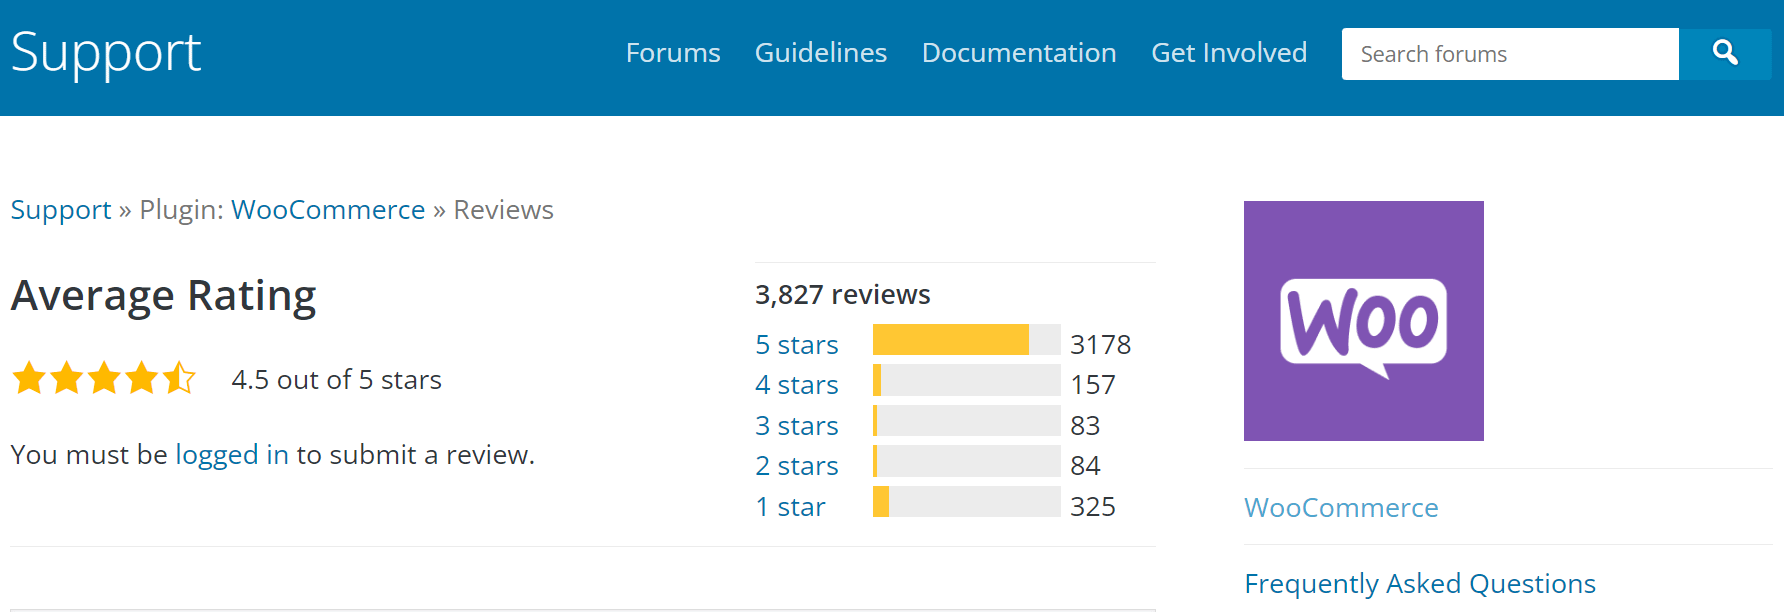 WooCommerce reviews. 